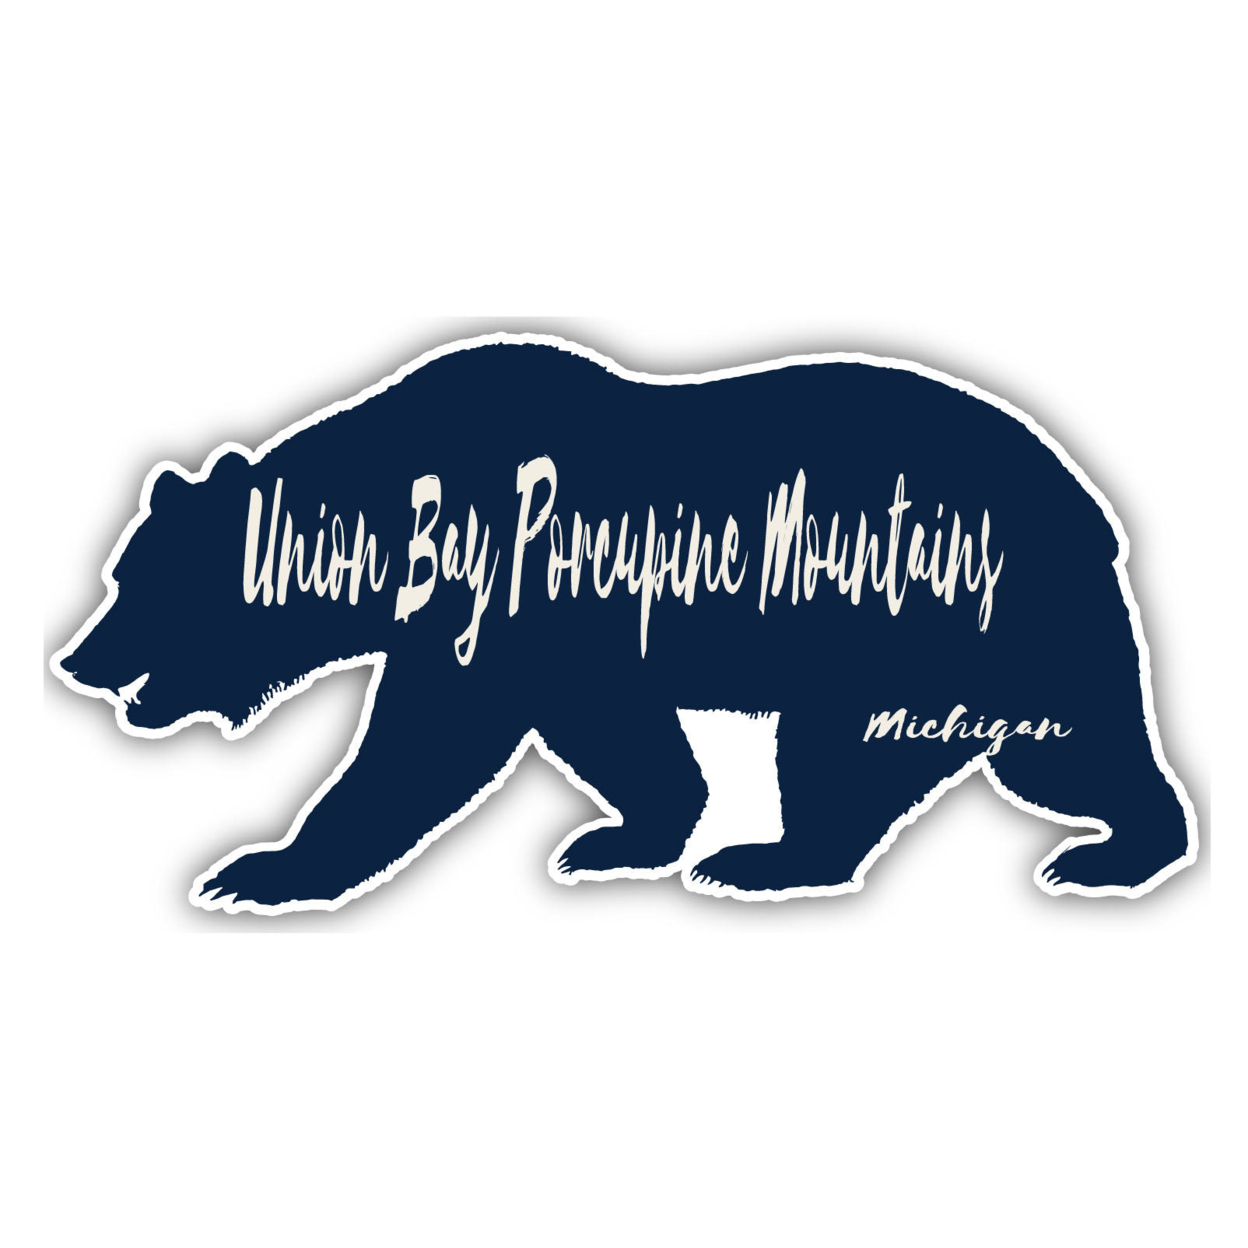 Union Bay Porcupine Mountains Michigan Souvenir Decorative Stickers (Choose Theme And Size) - Single Unit, 4-Inch, Bear